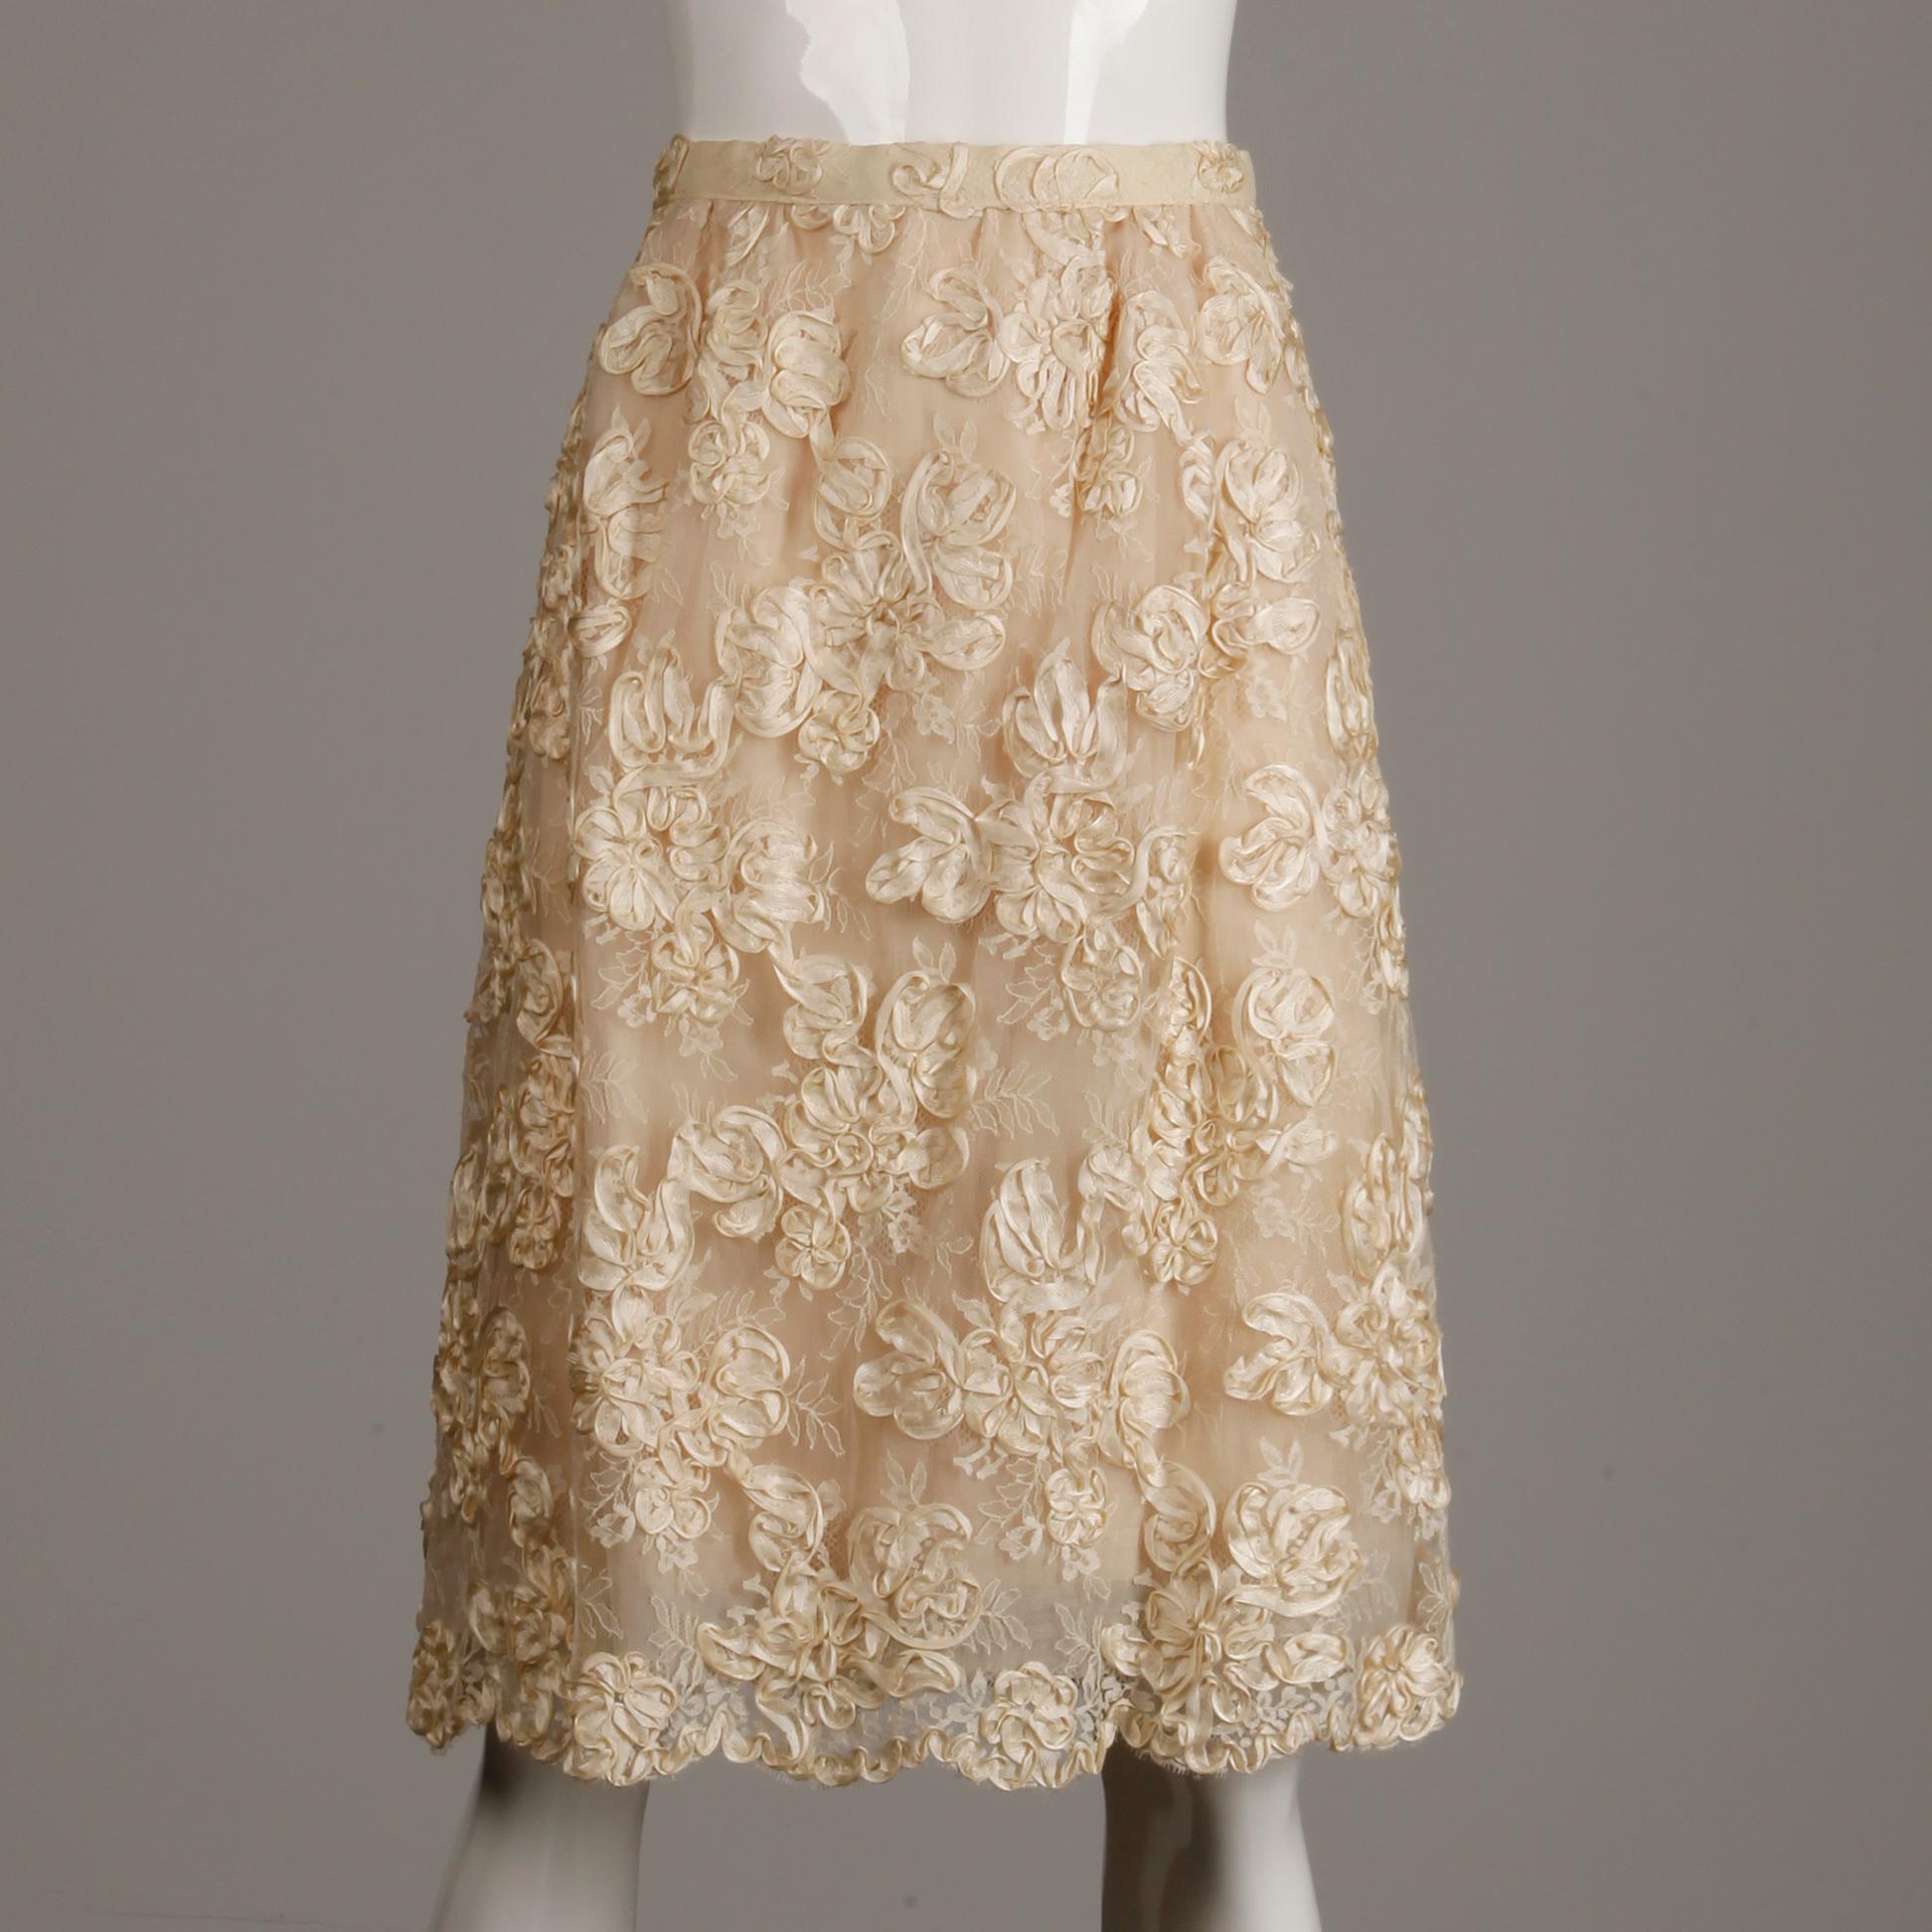 1960s Vintage Cream/ Off White Silk Soutache Lace Top/ Skirt Ensemble or Dress 4